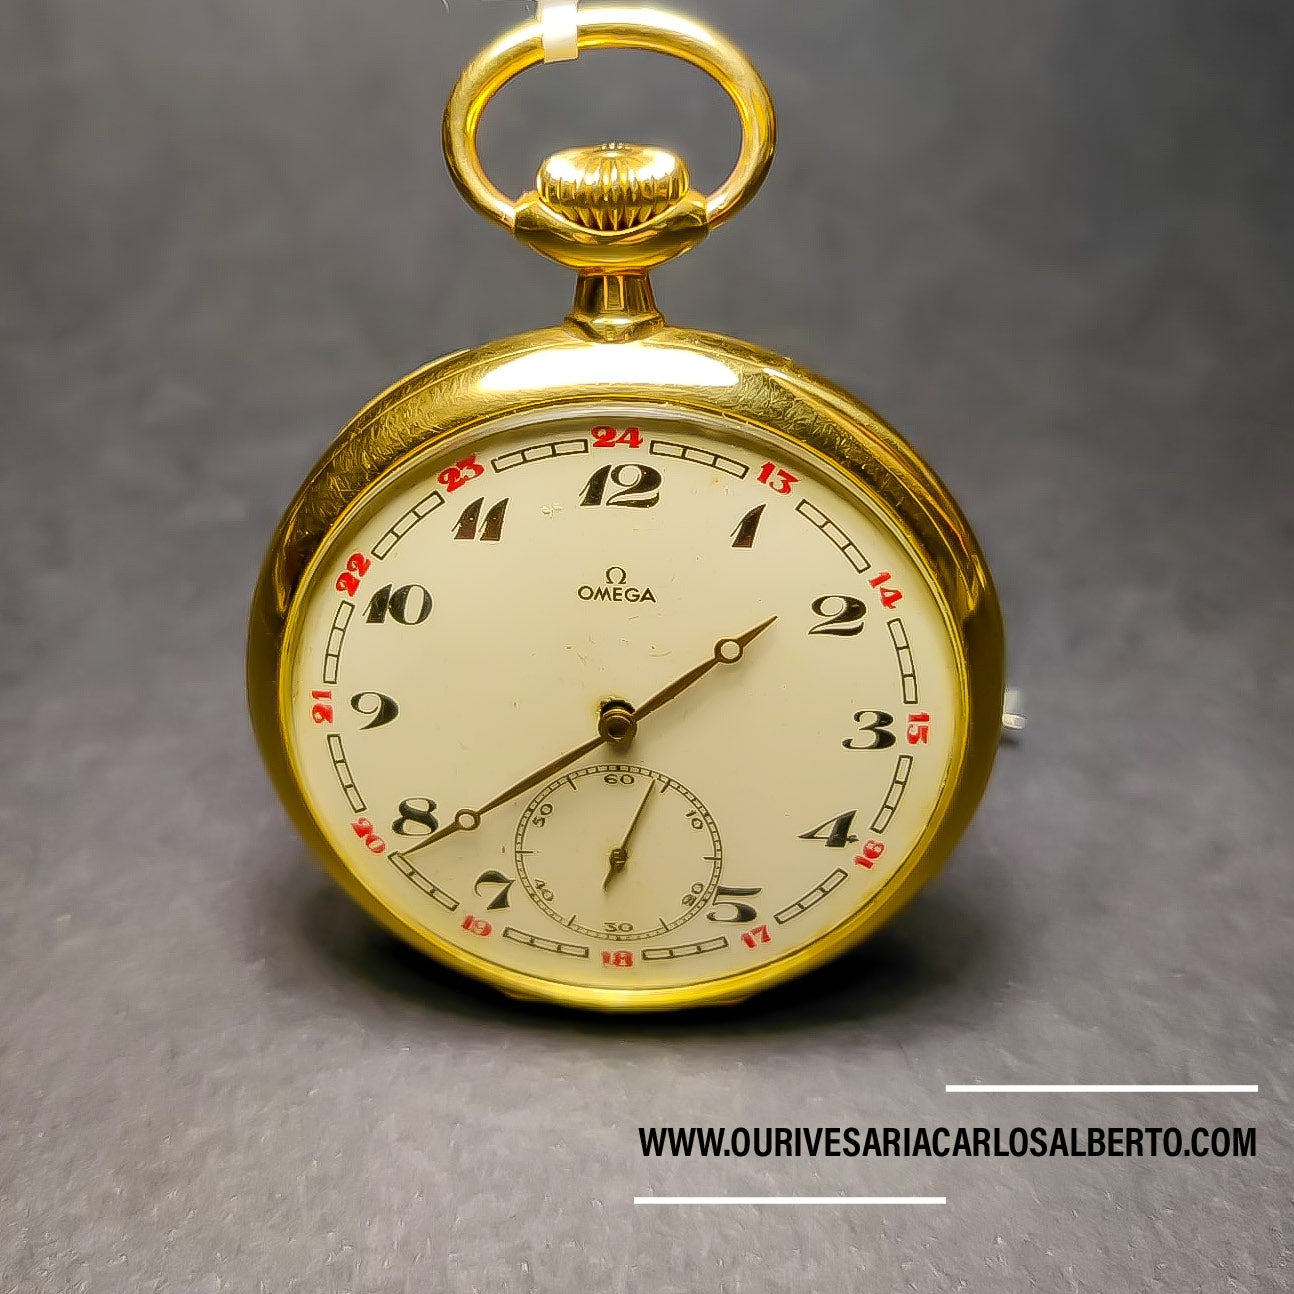 Relógio de bolso "Omega" Ourivesaria Carlos Alberto